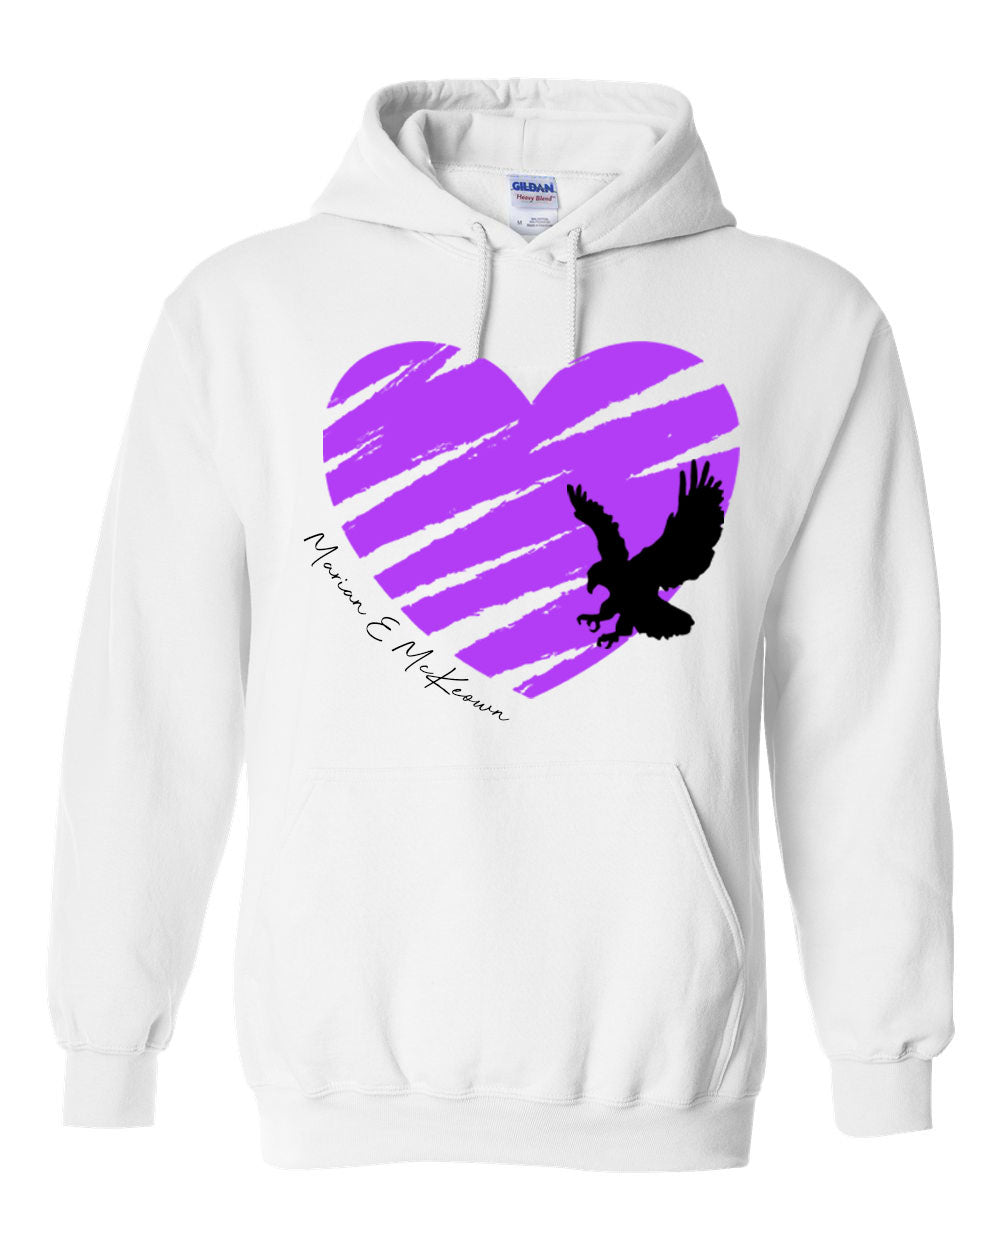 Heart Hawk Hooded Sweatshirt